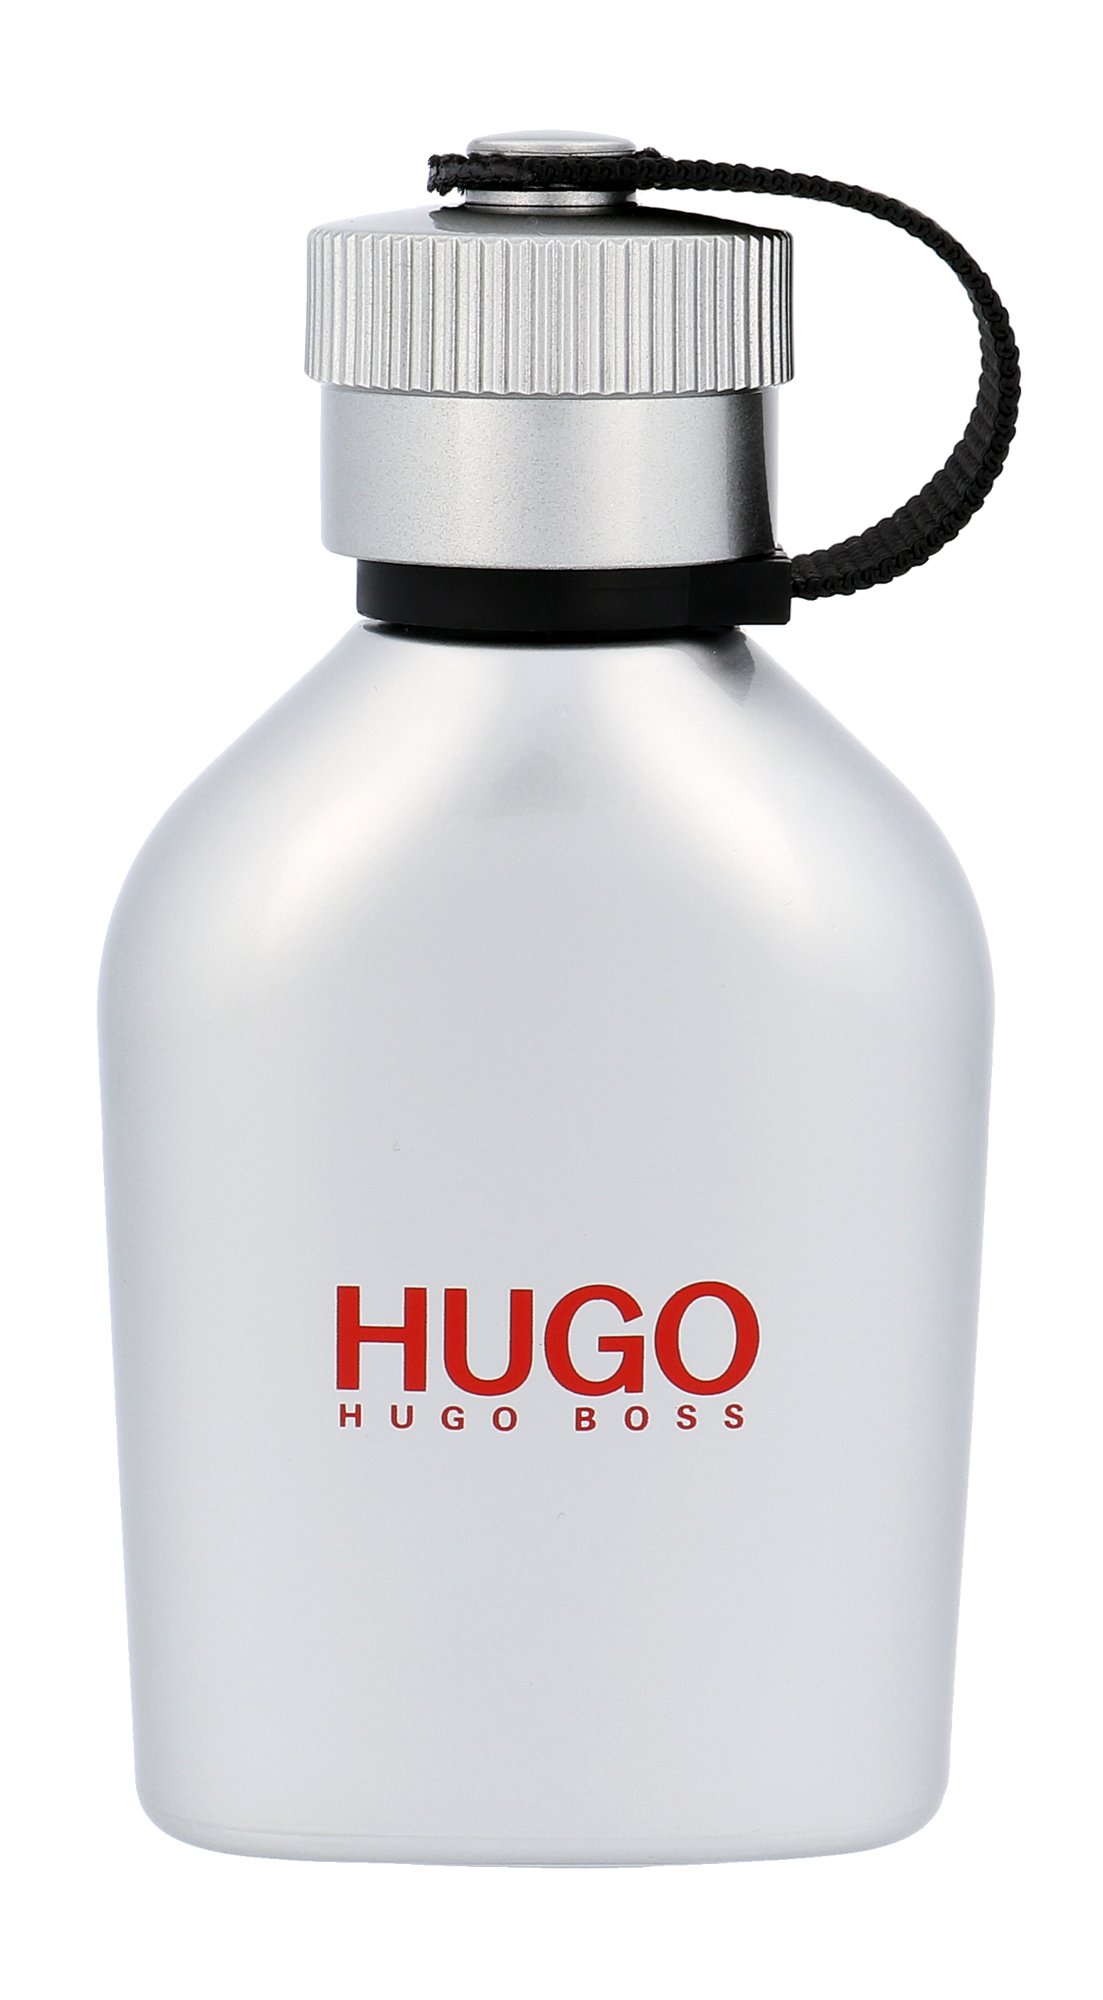 HUGO BOSS Hugo Iced, Toaletná voda 75ml